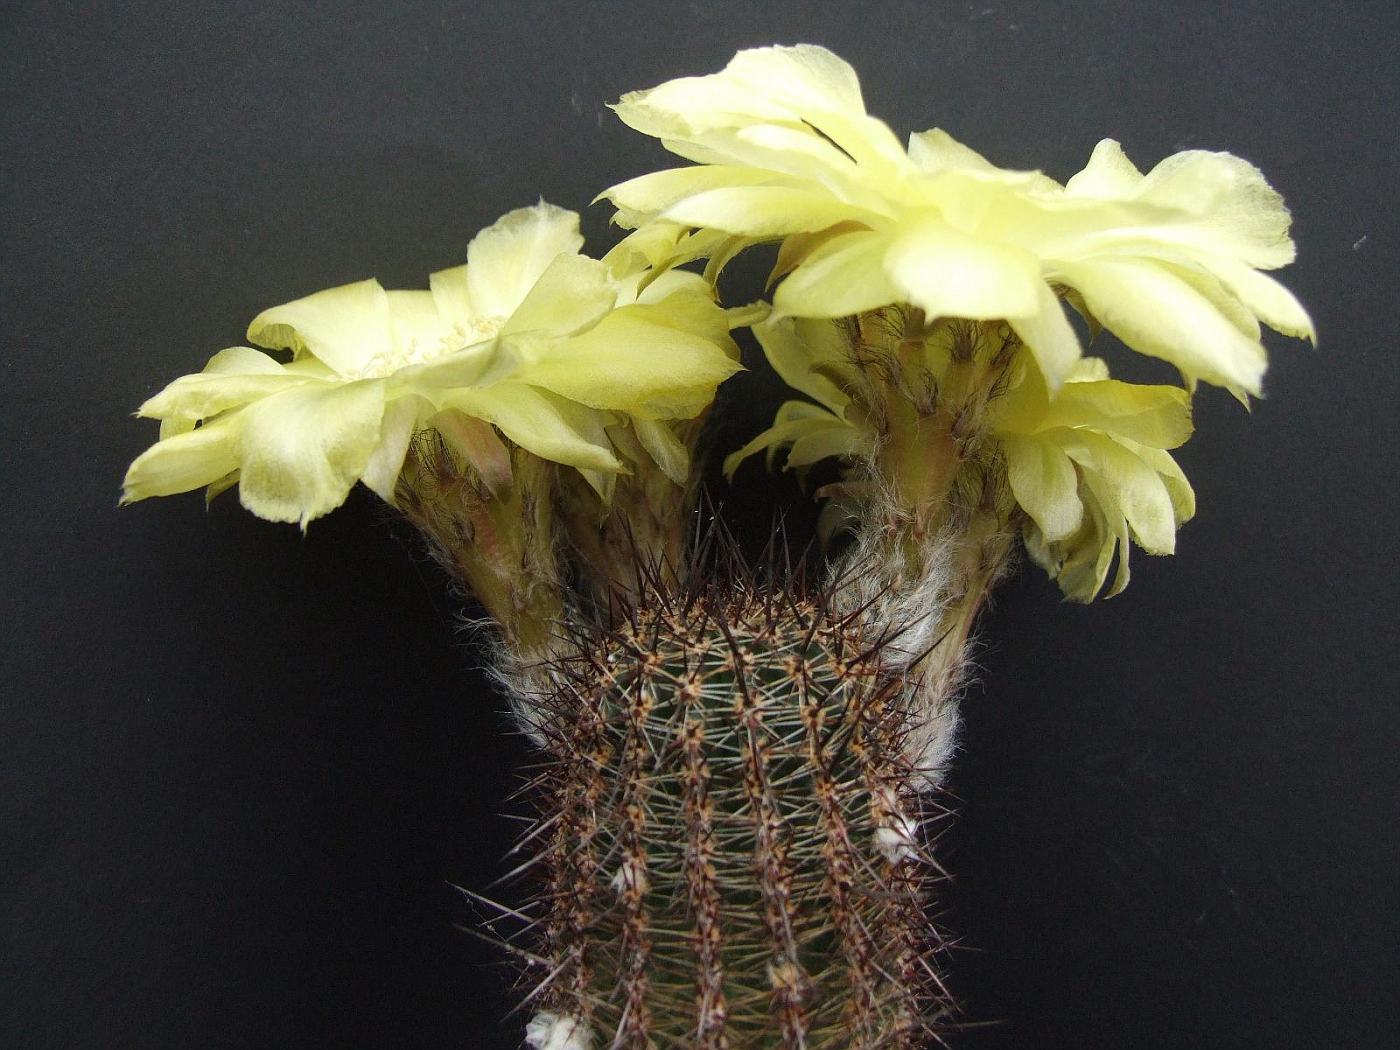 Echinopsis densispina v. carnea

